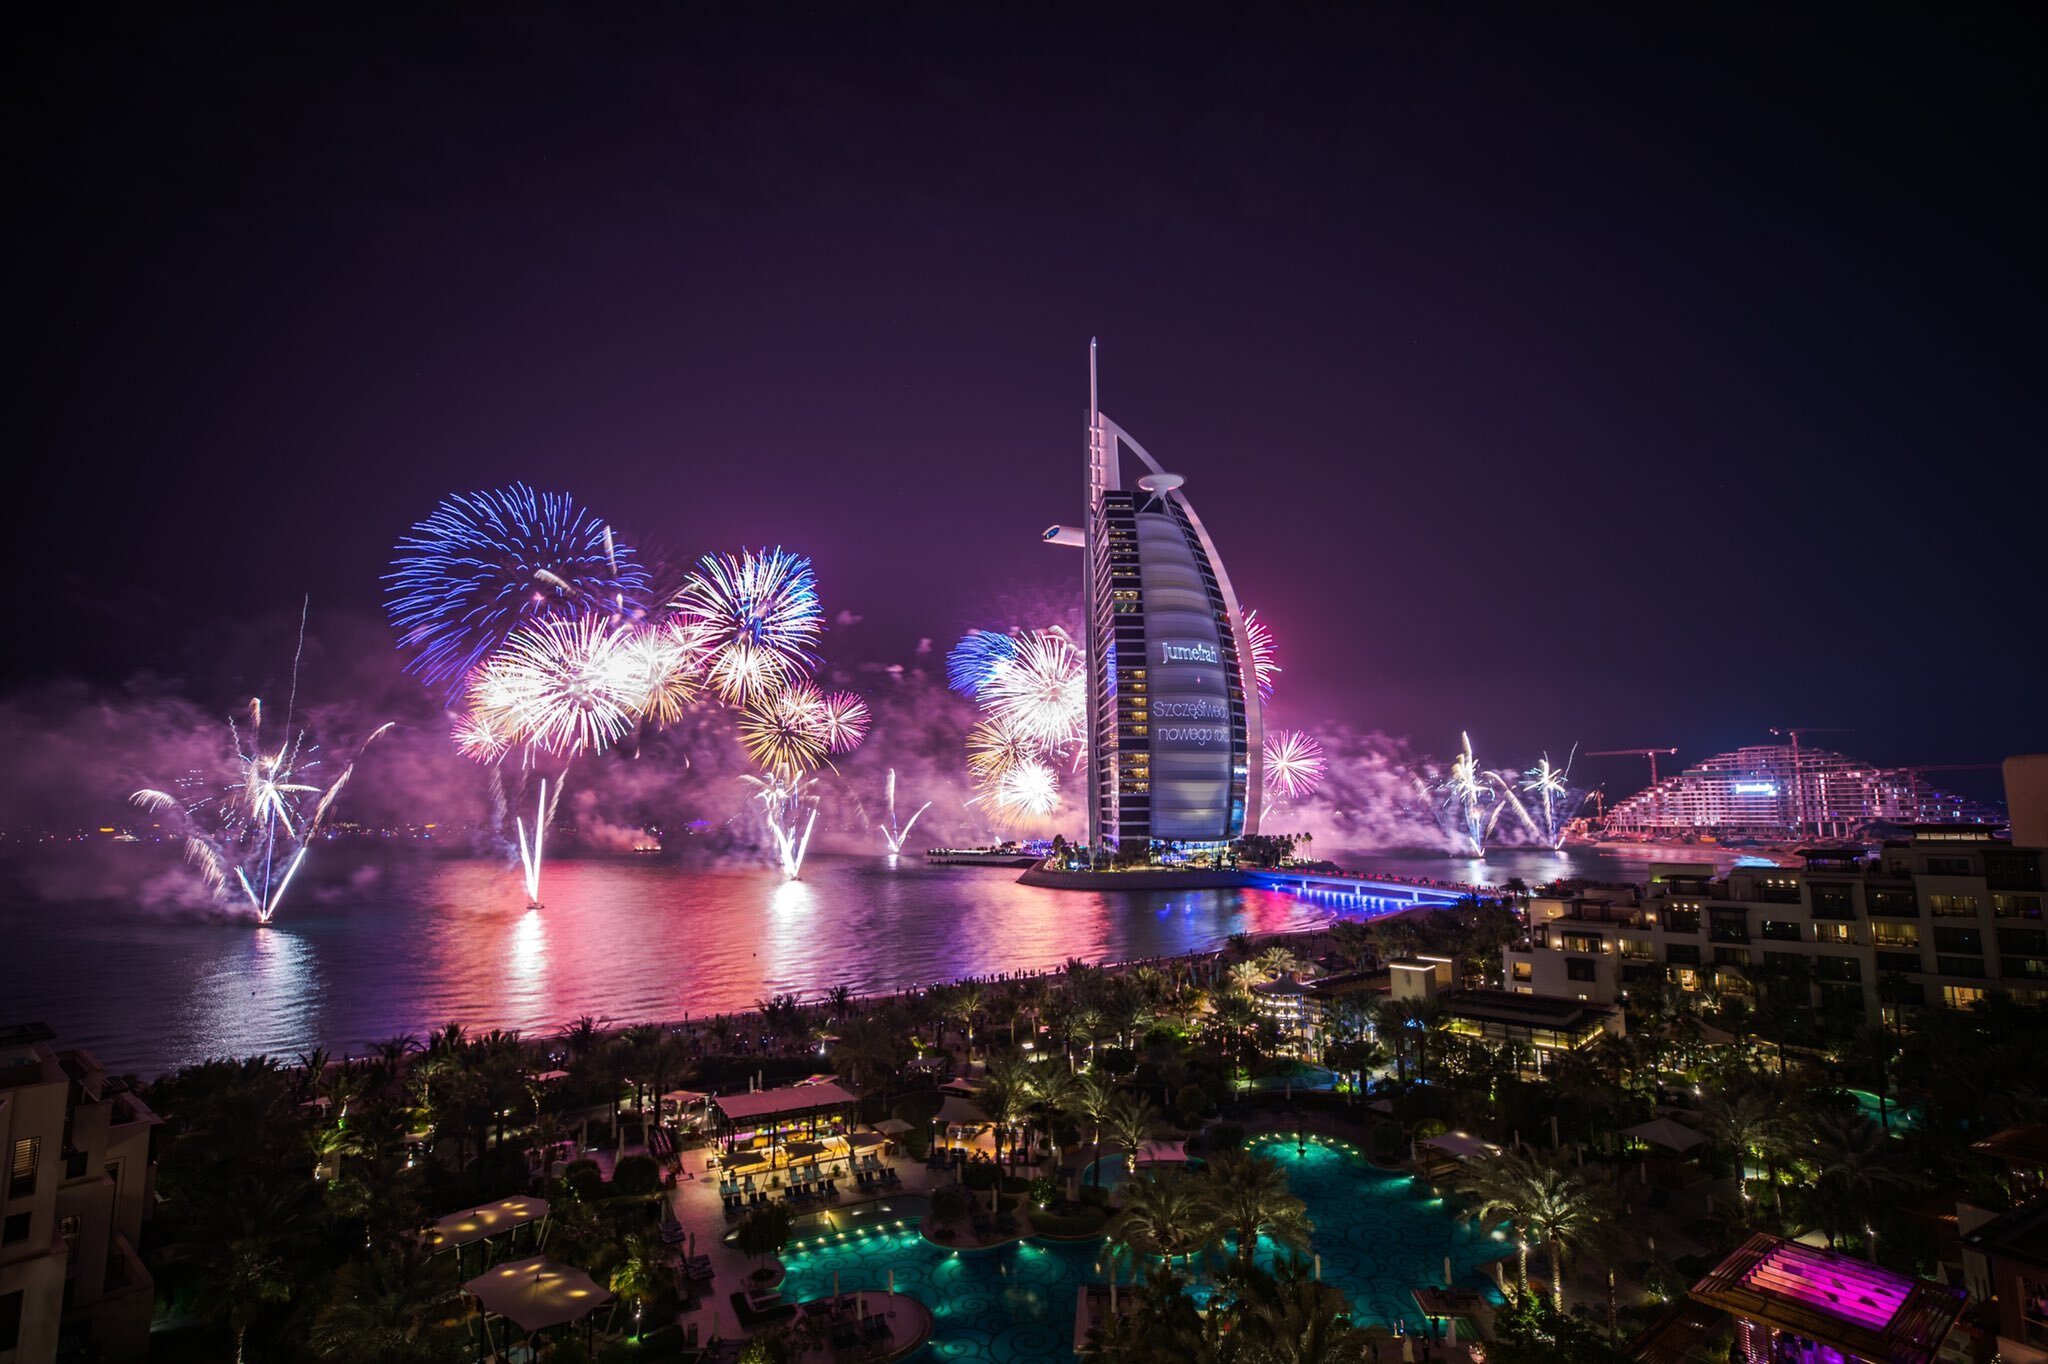 New Year Celebrations in Dubaiâââââââ